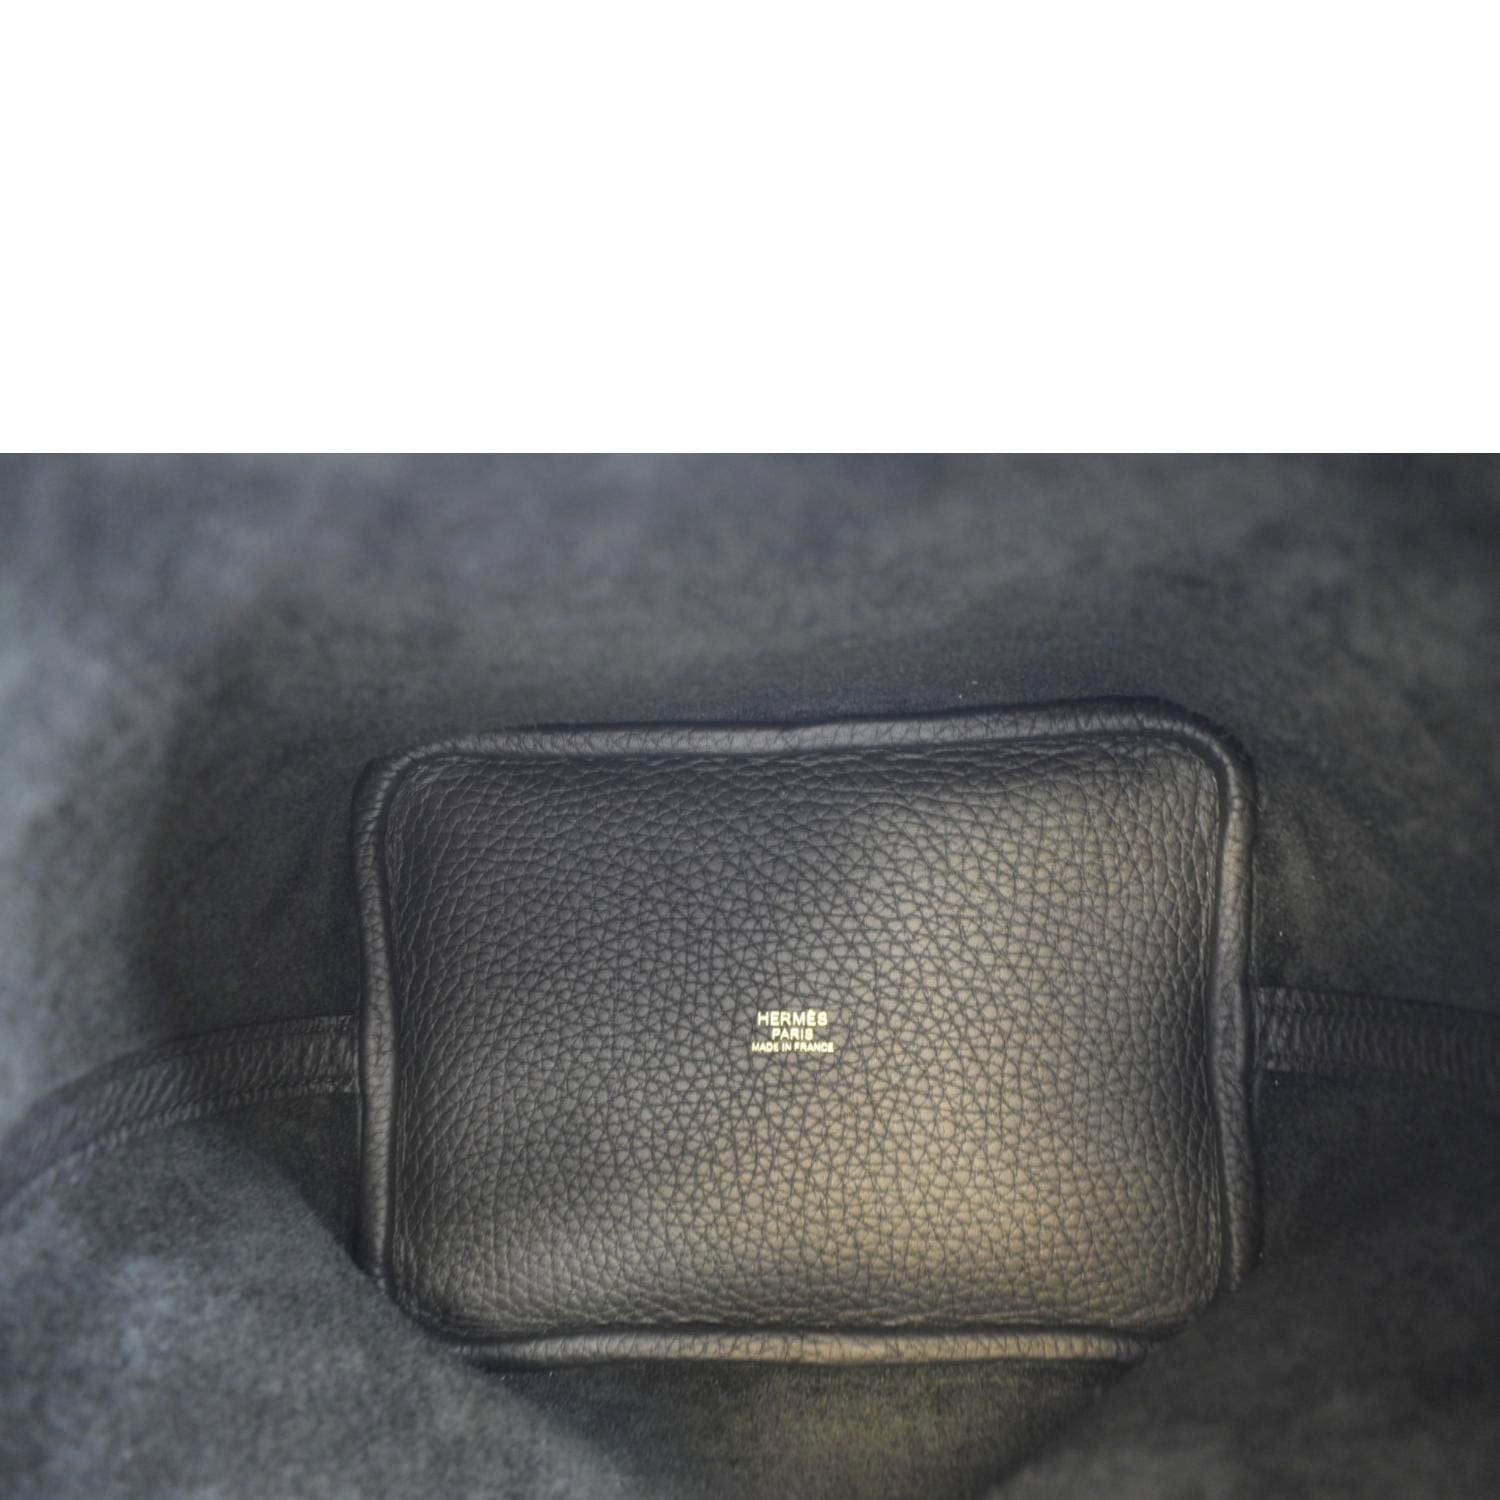 HERMES Picotin Lock 18 Taurillon Clemence Handbag in Bi-Color Black & Navy  – GHW (Stamp Y)